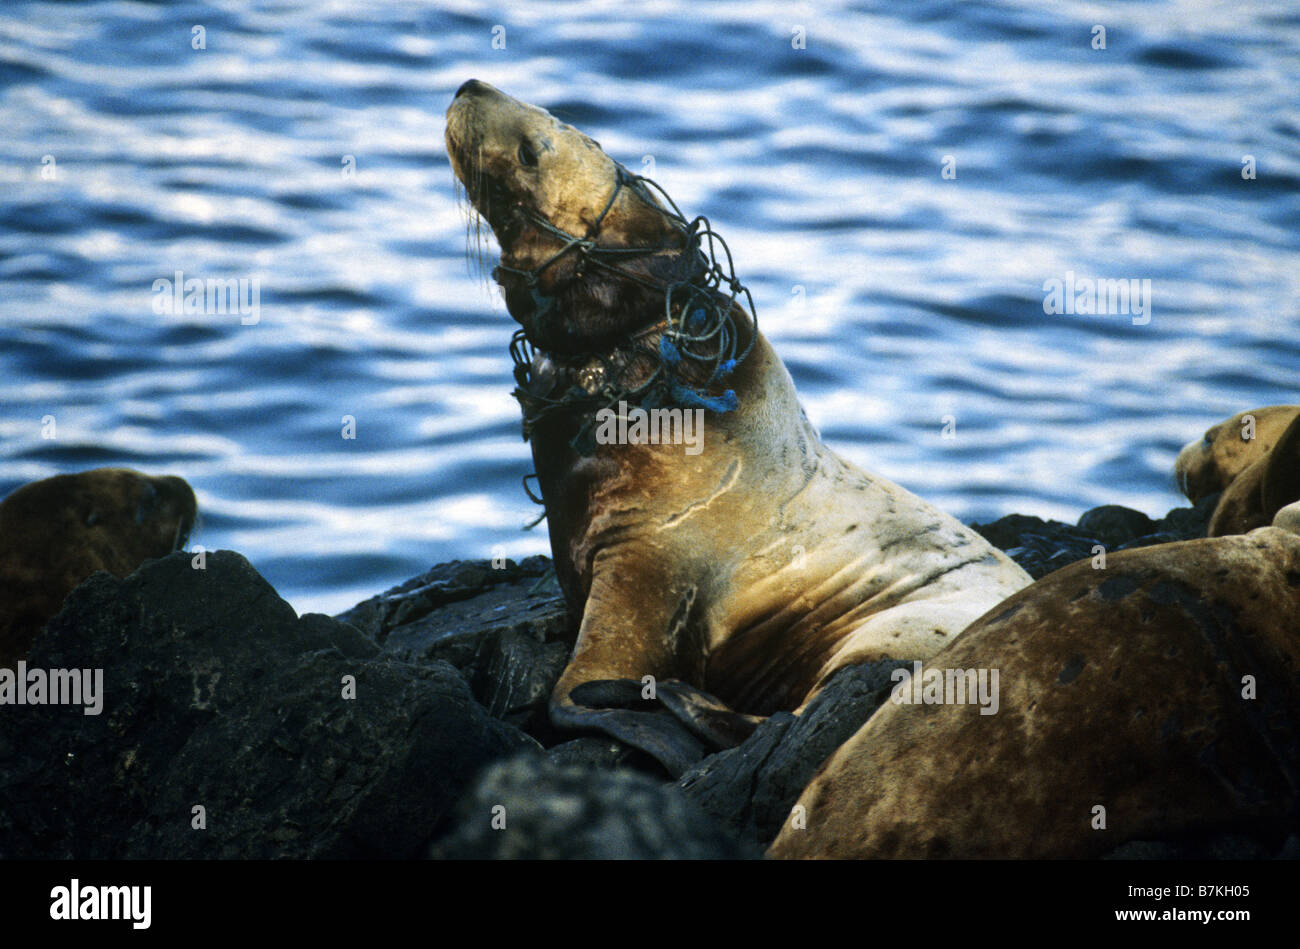 Les lions de mer de Steller prennent dans les filets de pêche, Yasha Island, sud-est de l'Alaska Banque D'Images